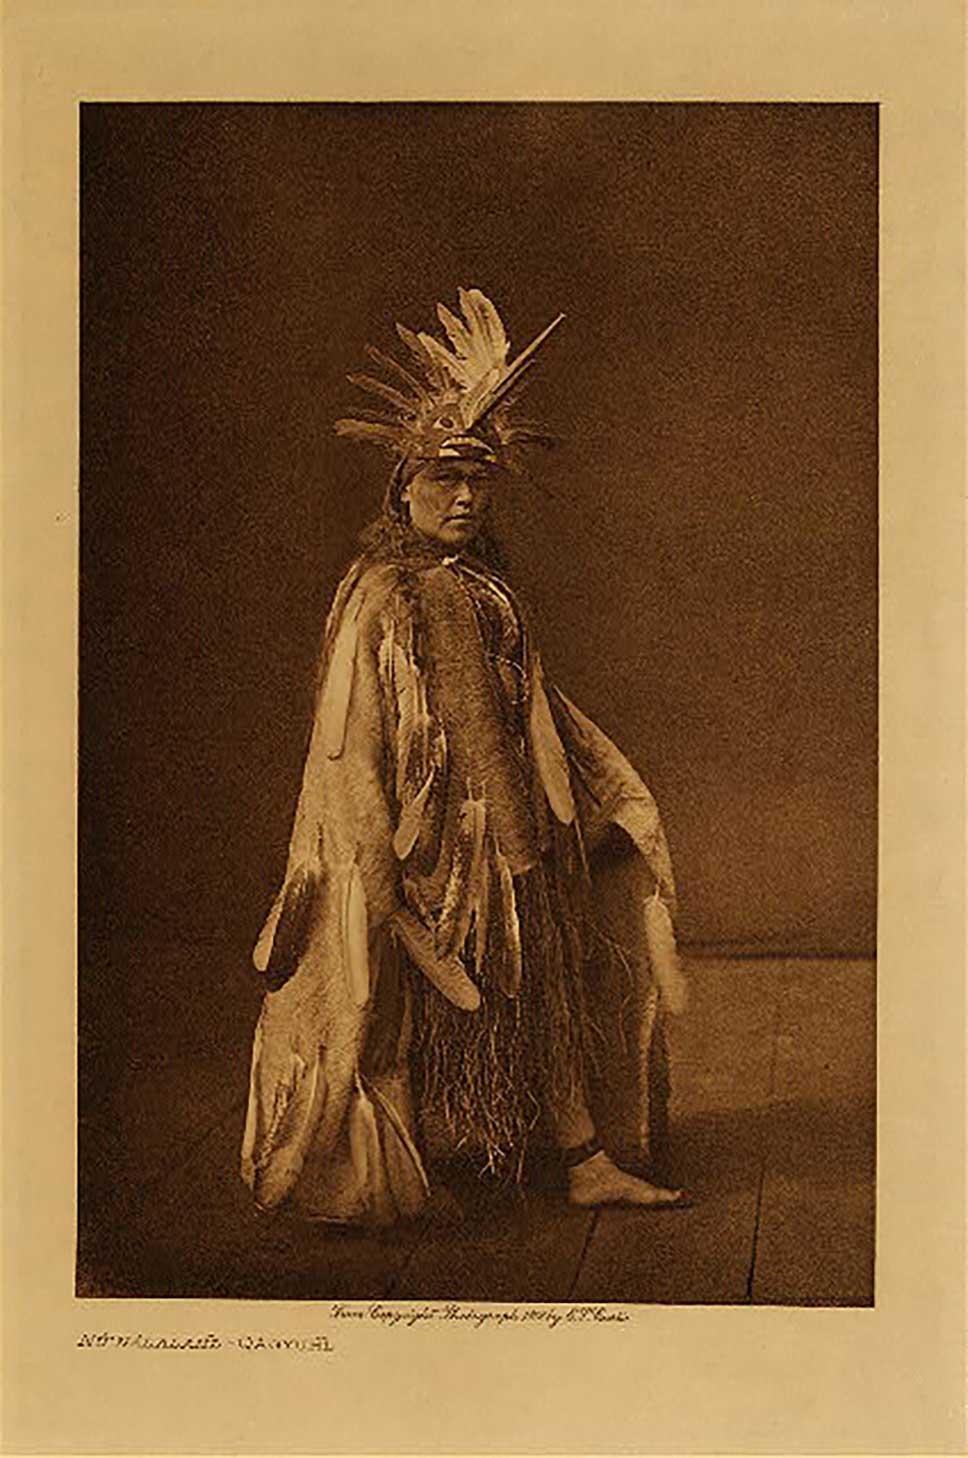 Sepia tone photograph by Edward Curtis shows dancer in full regalia wearing 'Na'nalalał – Weather Dancer headdress